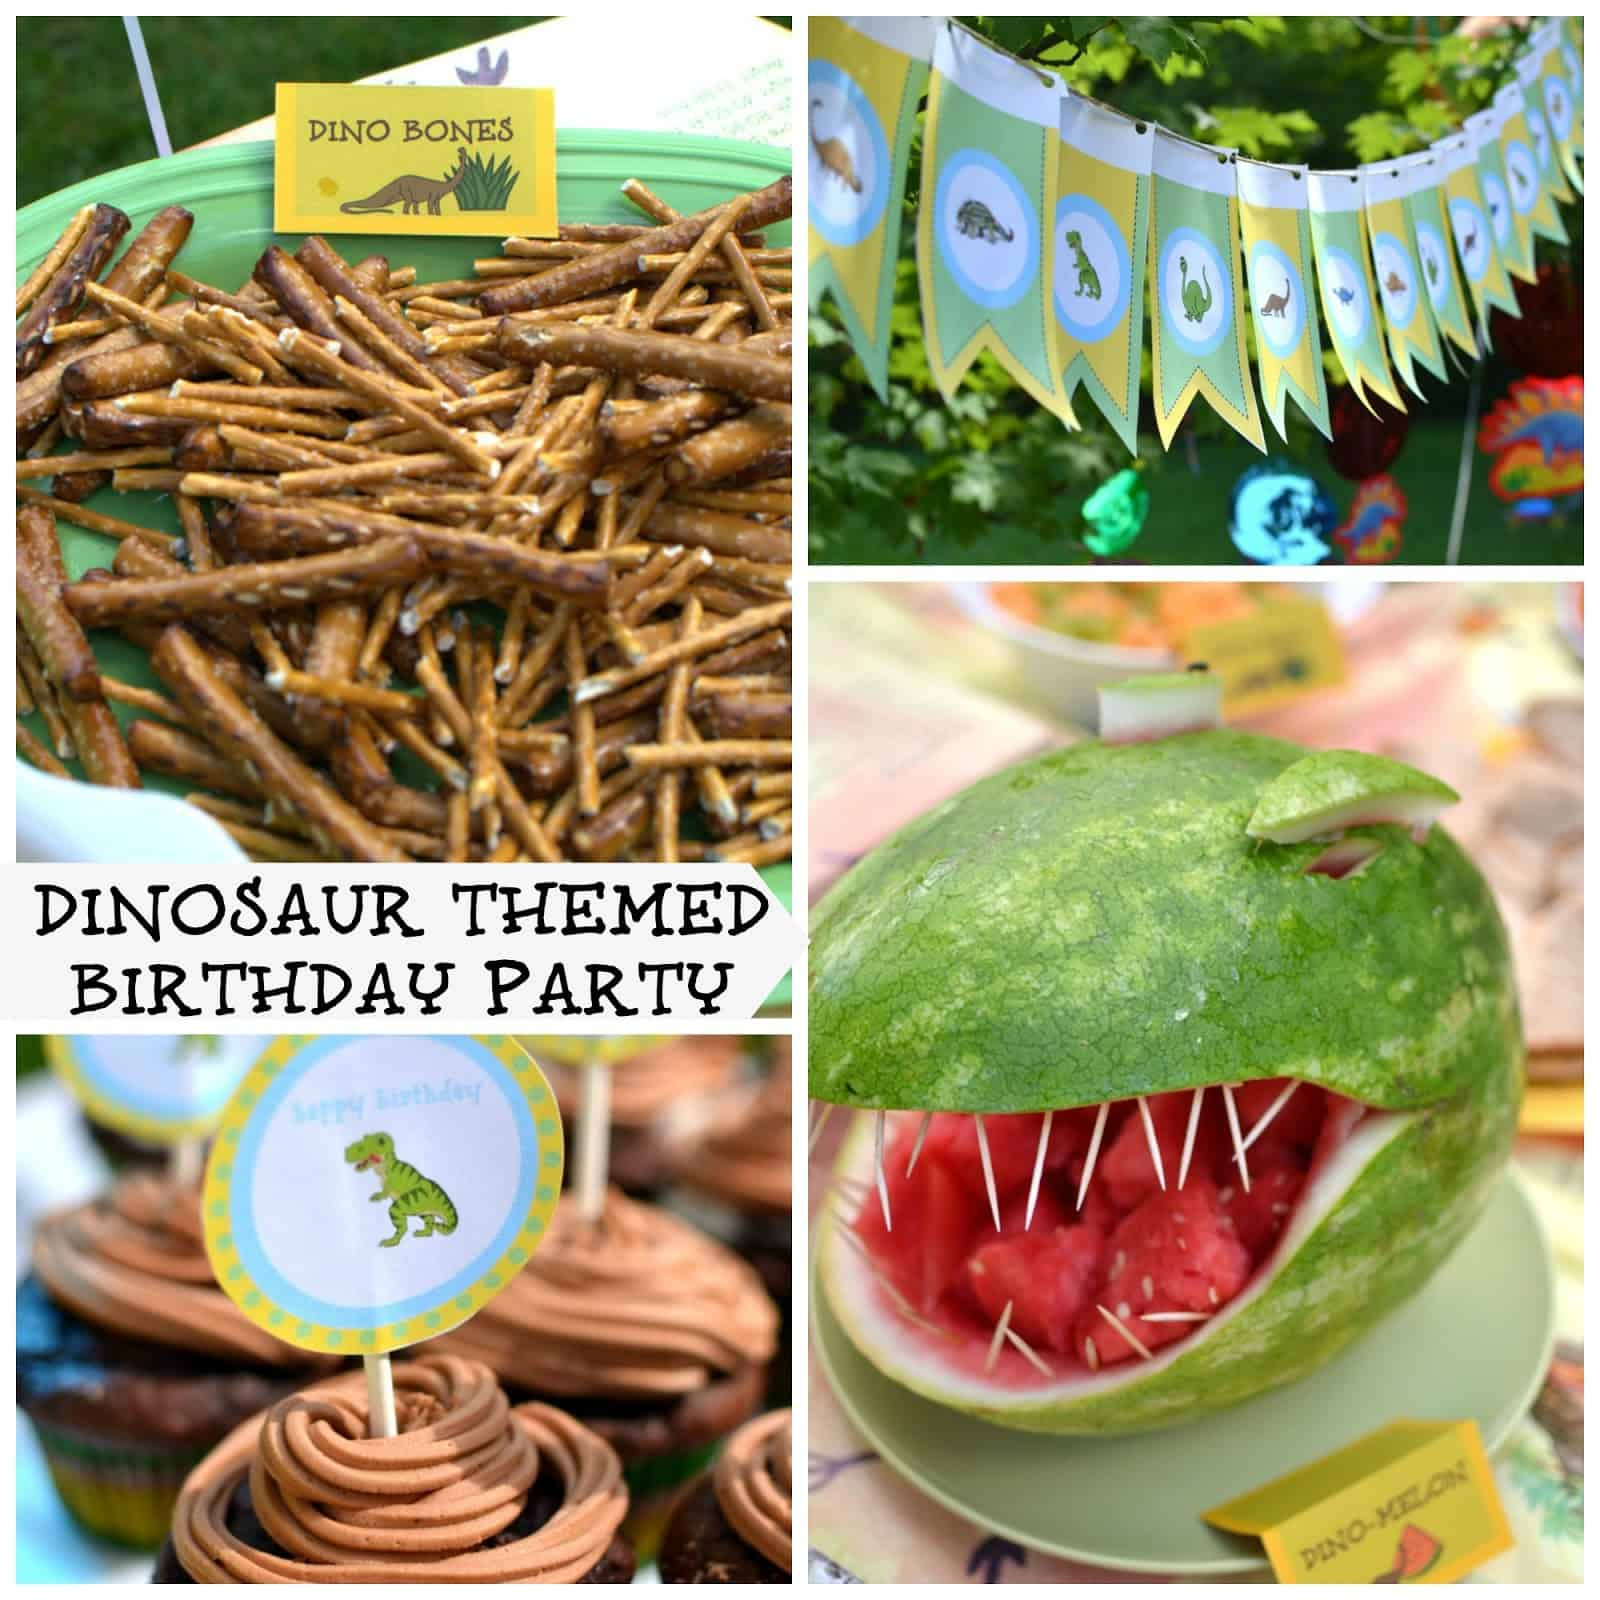 Dinosaur Party Food Ideas
 Party with dinosaurs Dinosaur themed birthday party